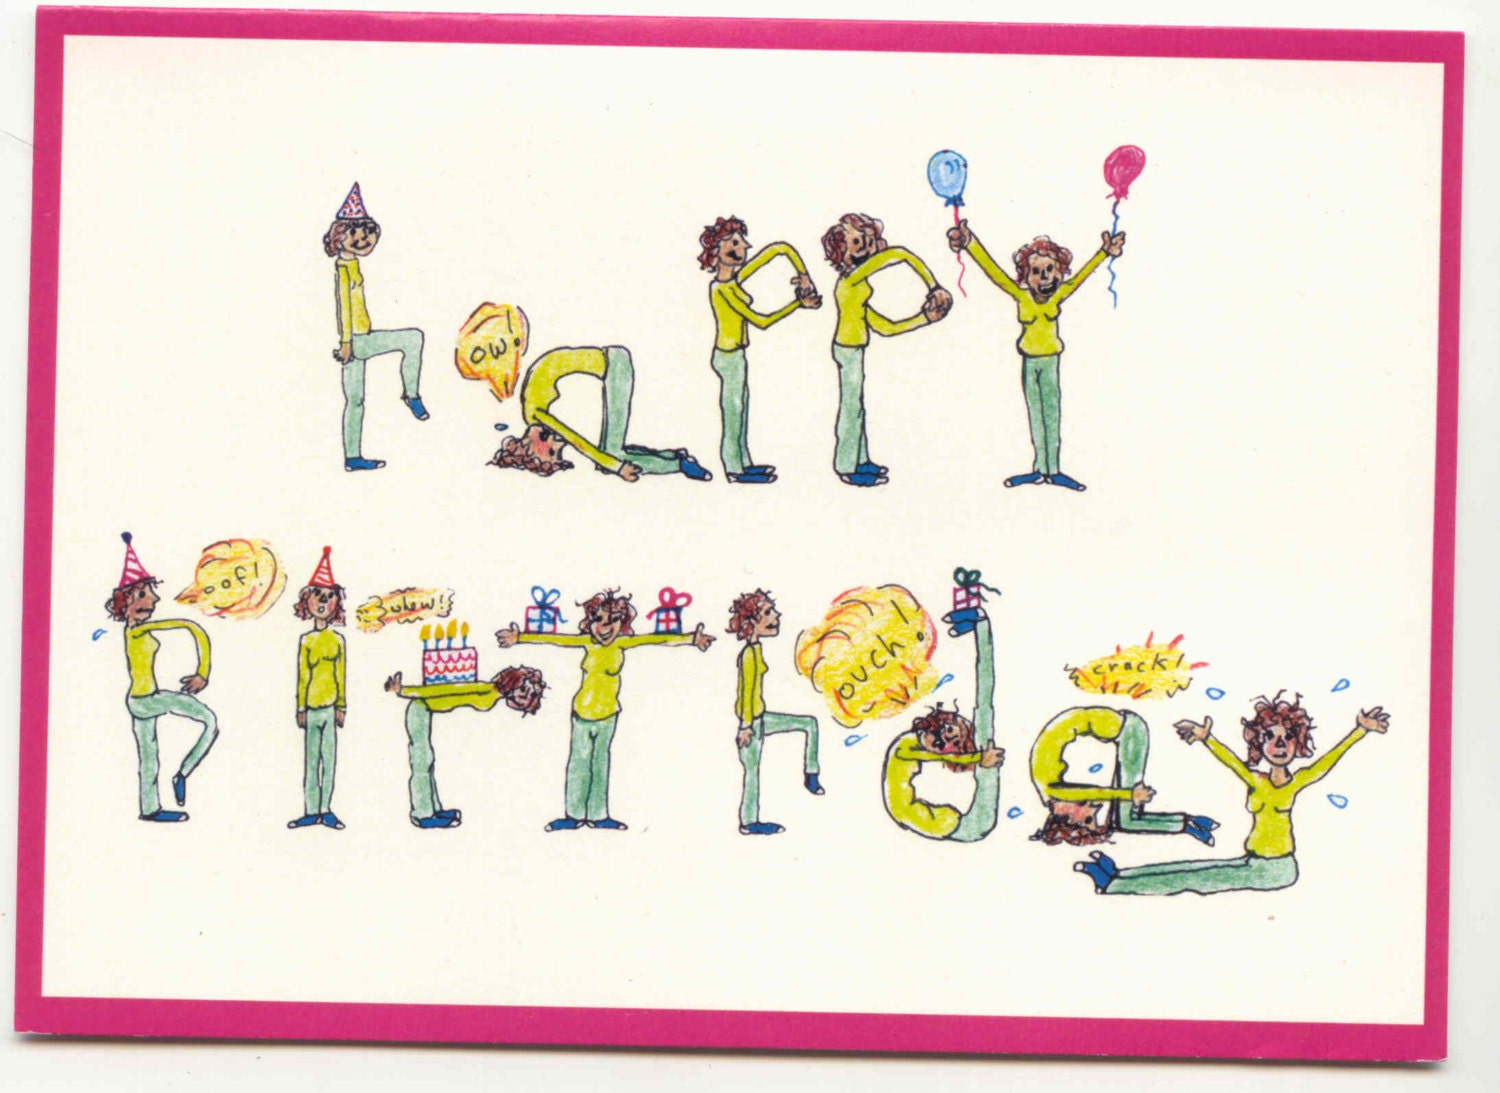 Buy Funny Yoga Birthday Card Online in India - Etsy